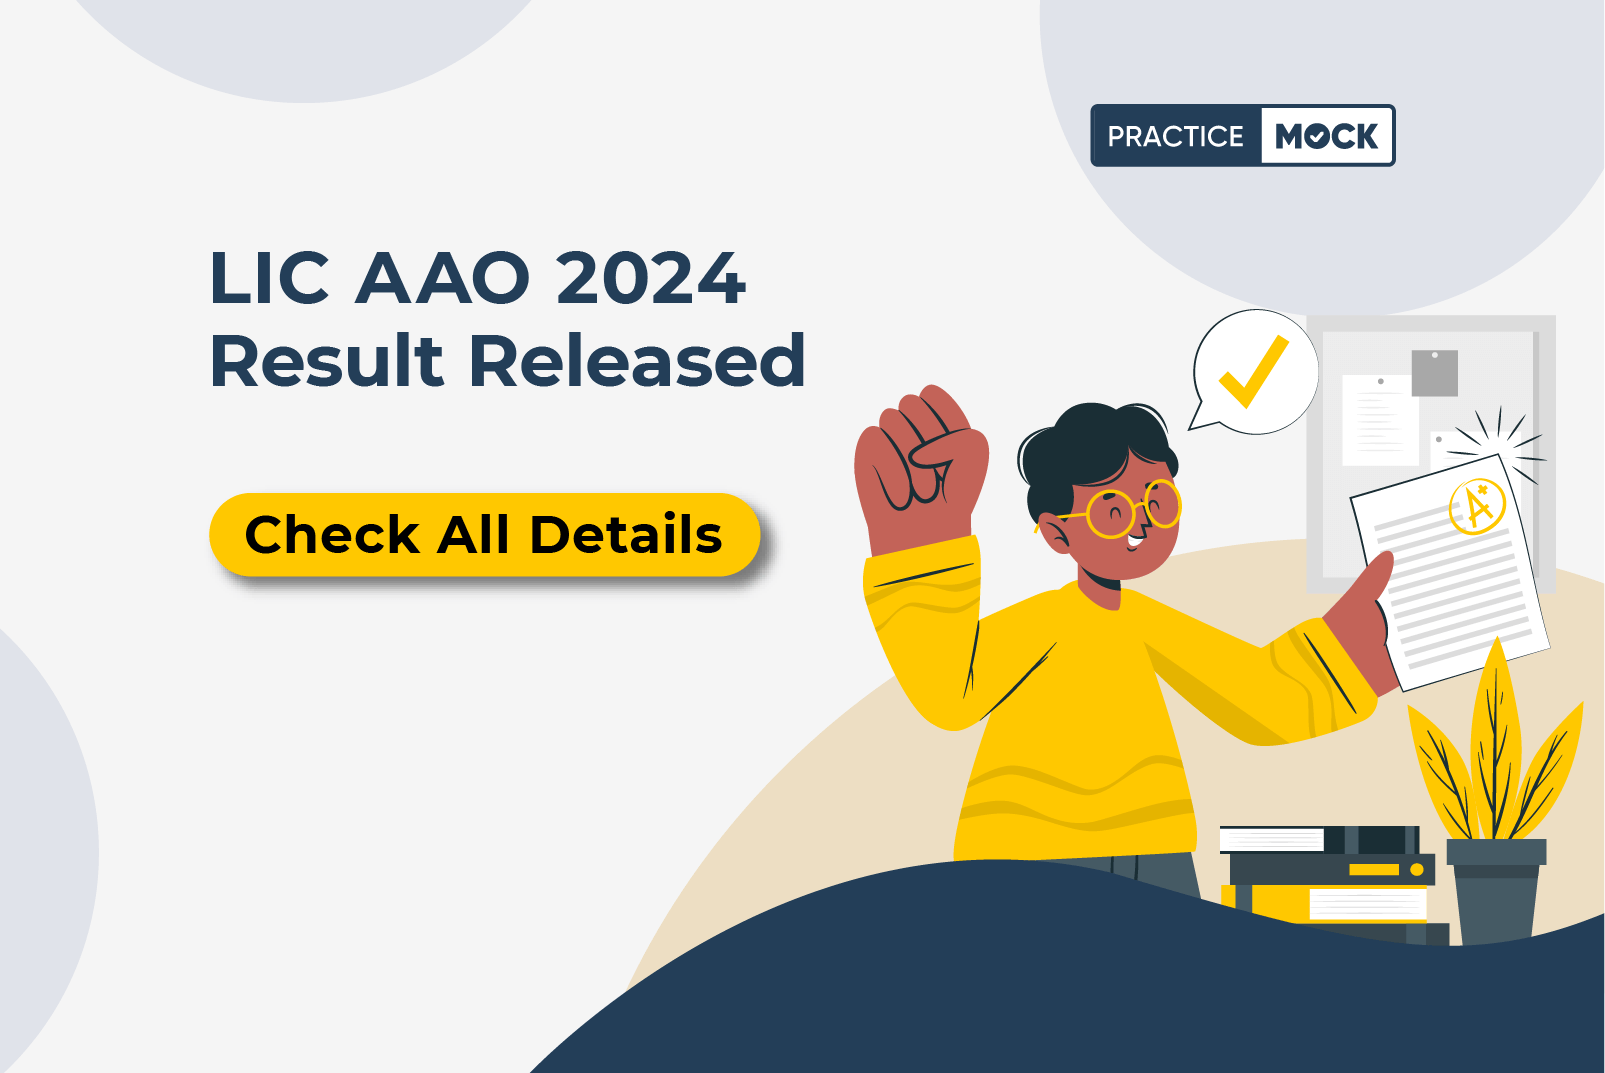 LIC AAO 2024 result